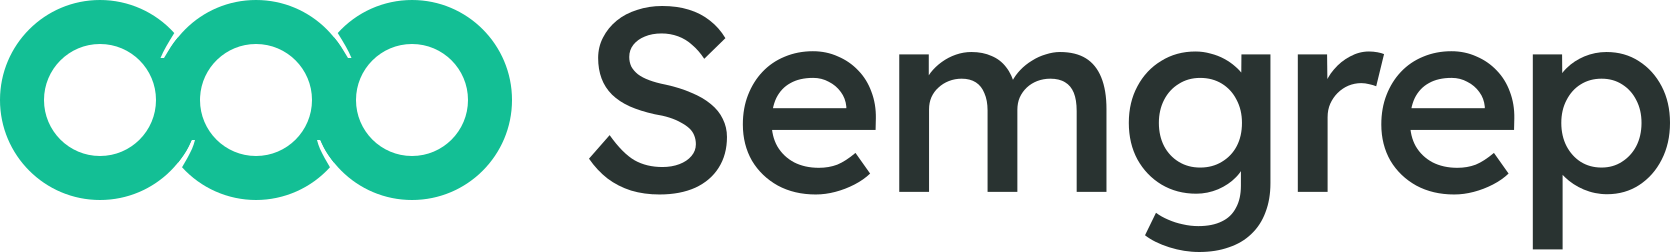 Semgrep logo